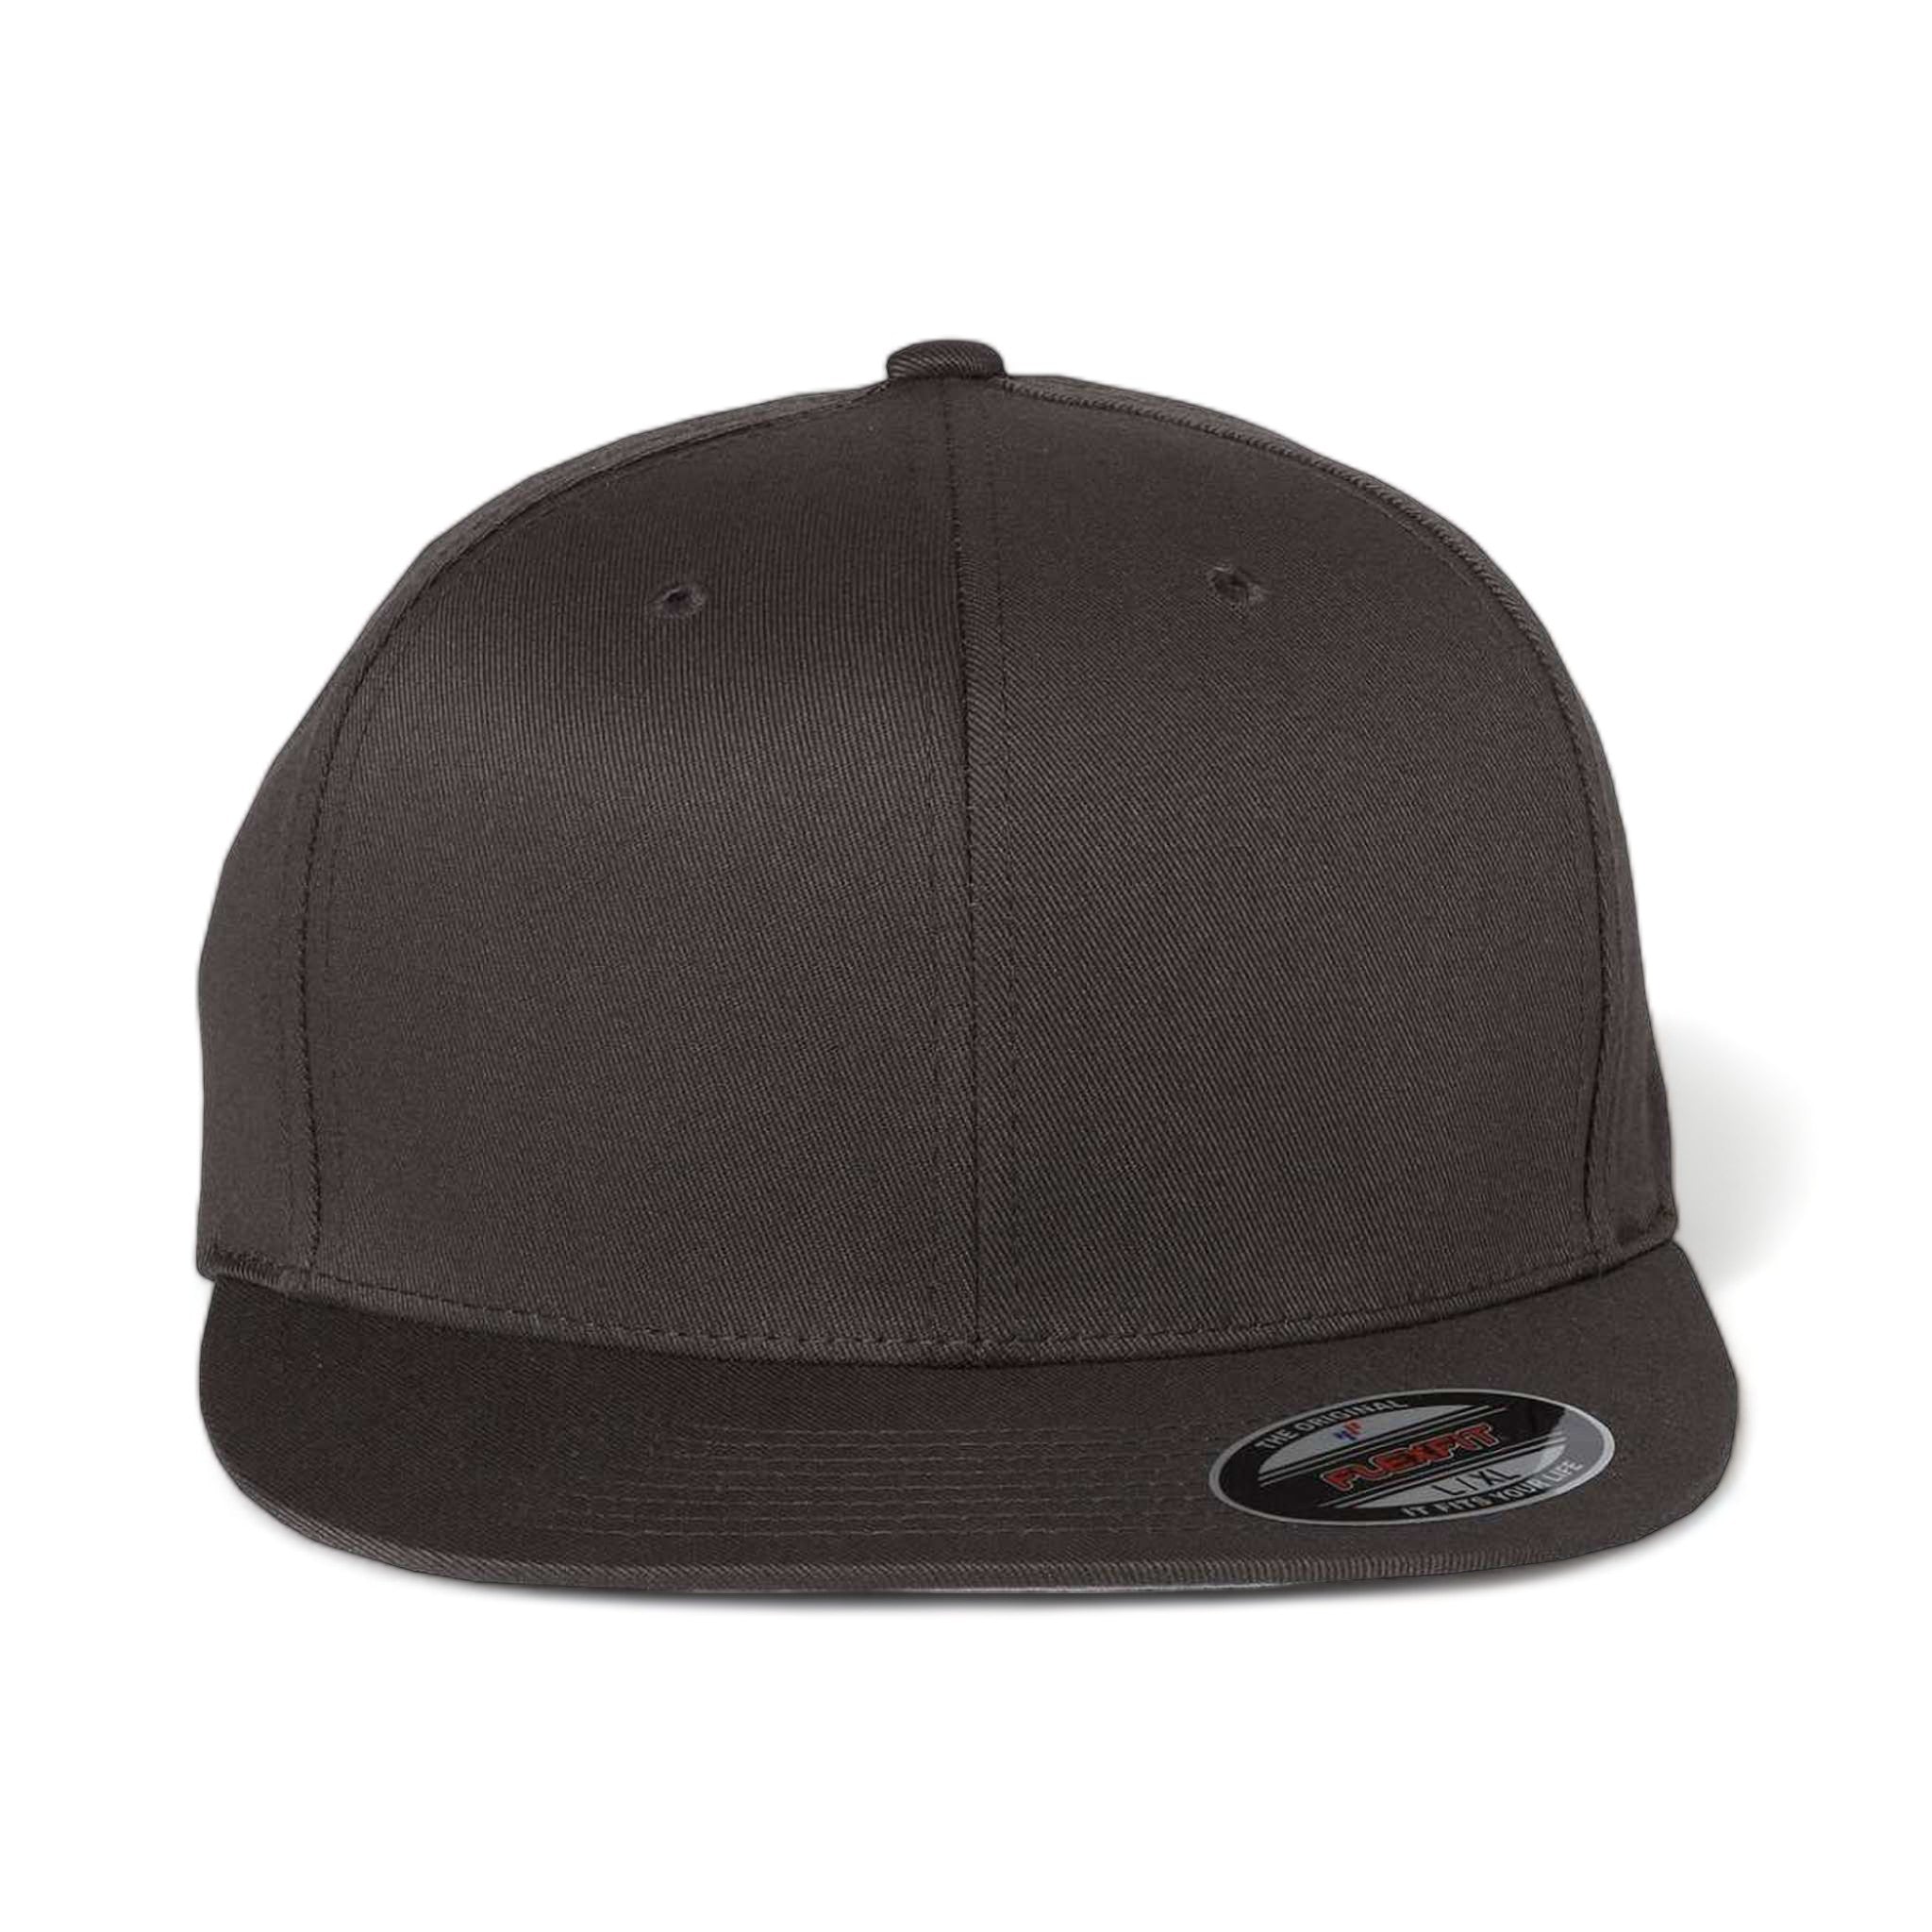 Front view of Flexfit 6297f custom hat in dark grey